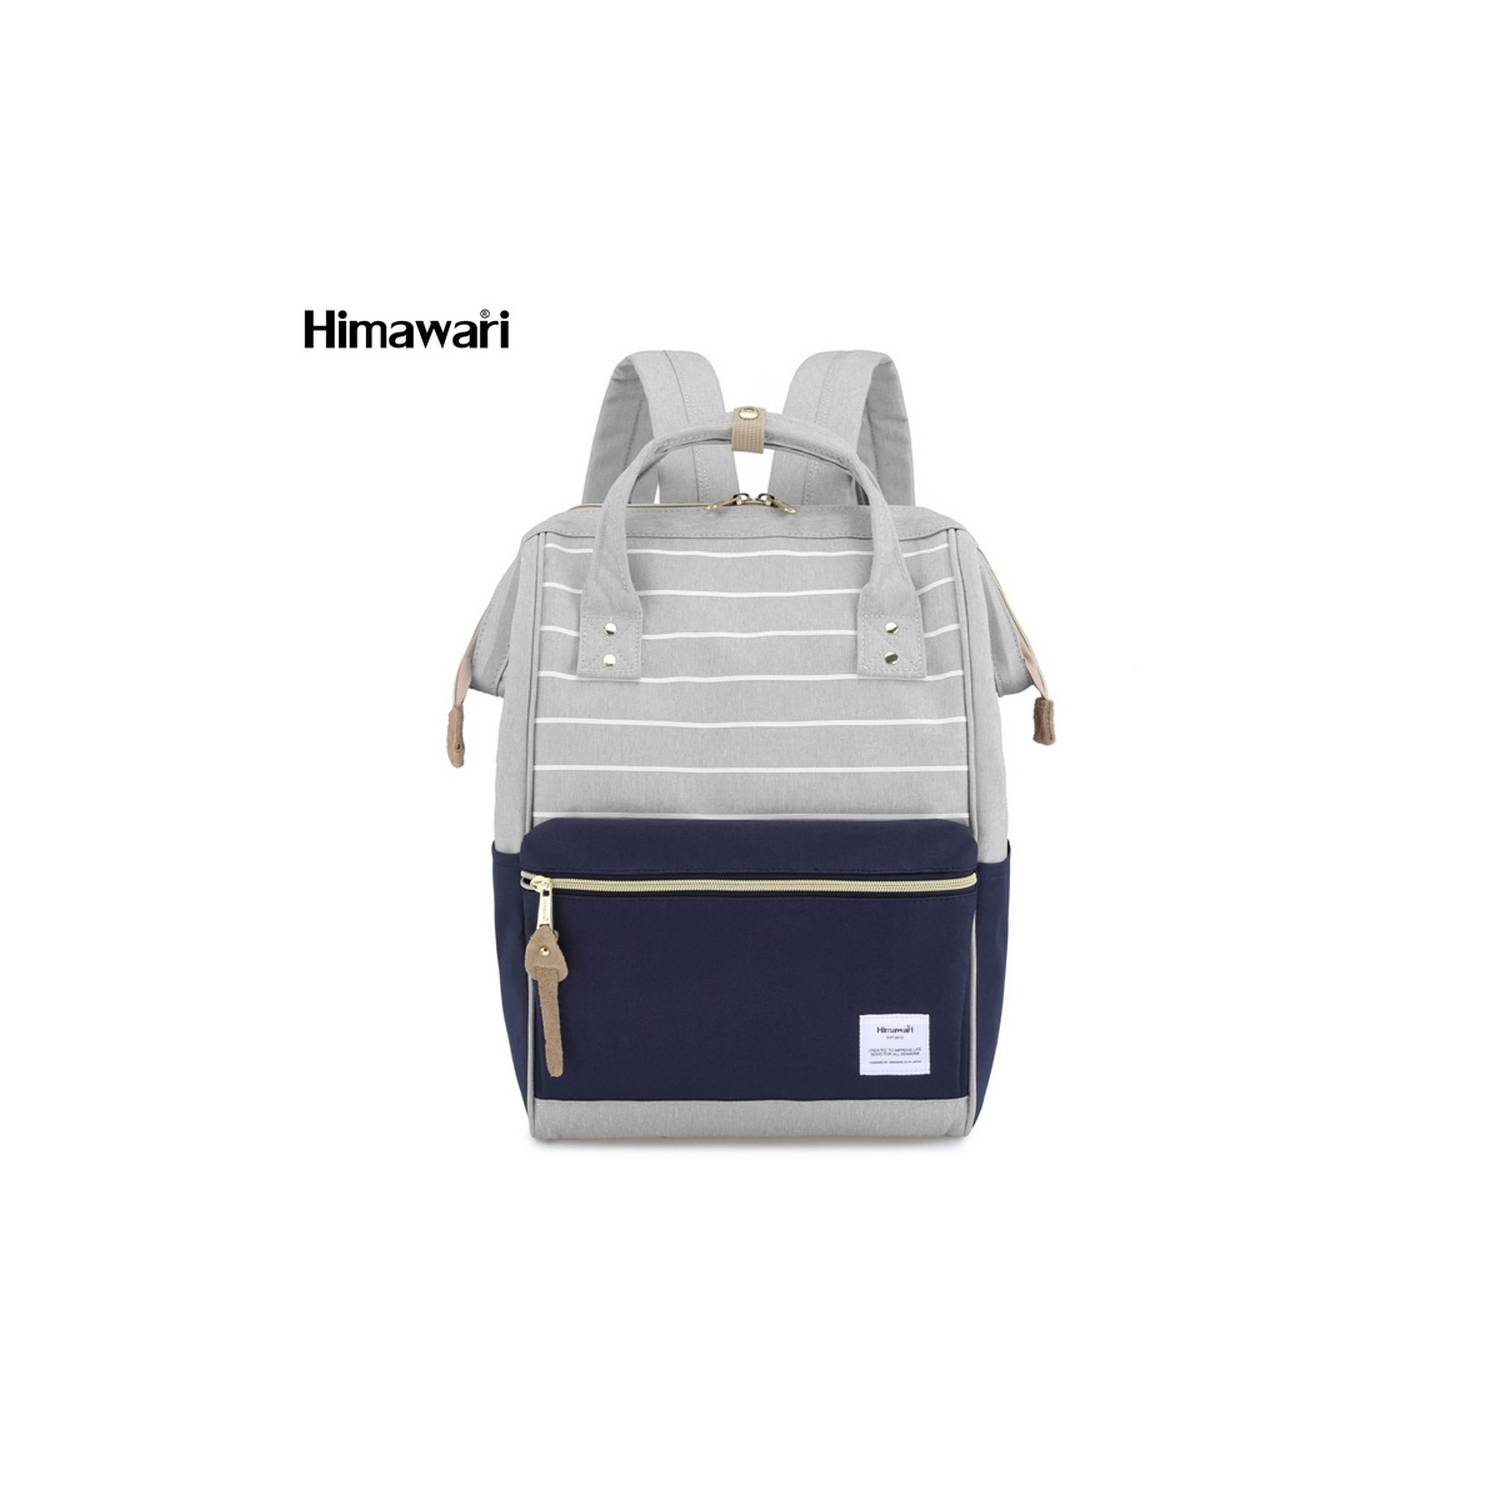 Himawari - Mochila multibolsillos porta laptop con USB - Caqui y Gris  HIMAWARI